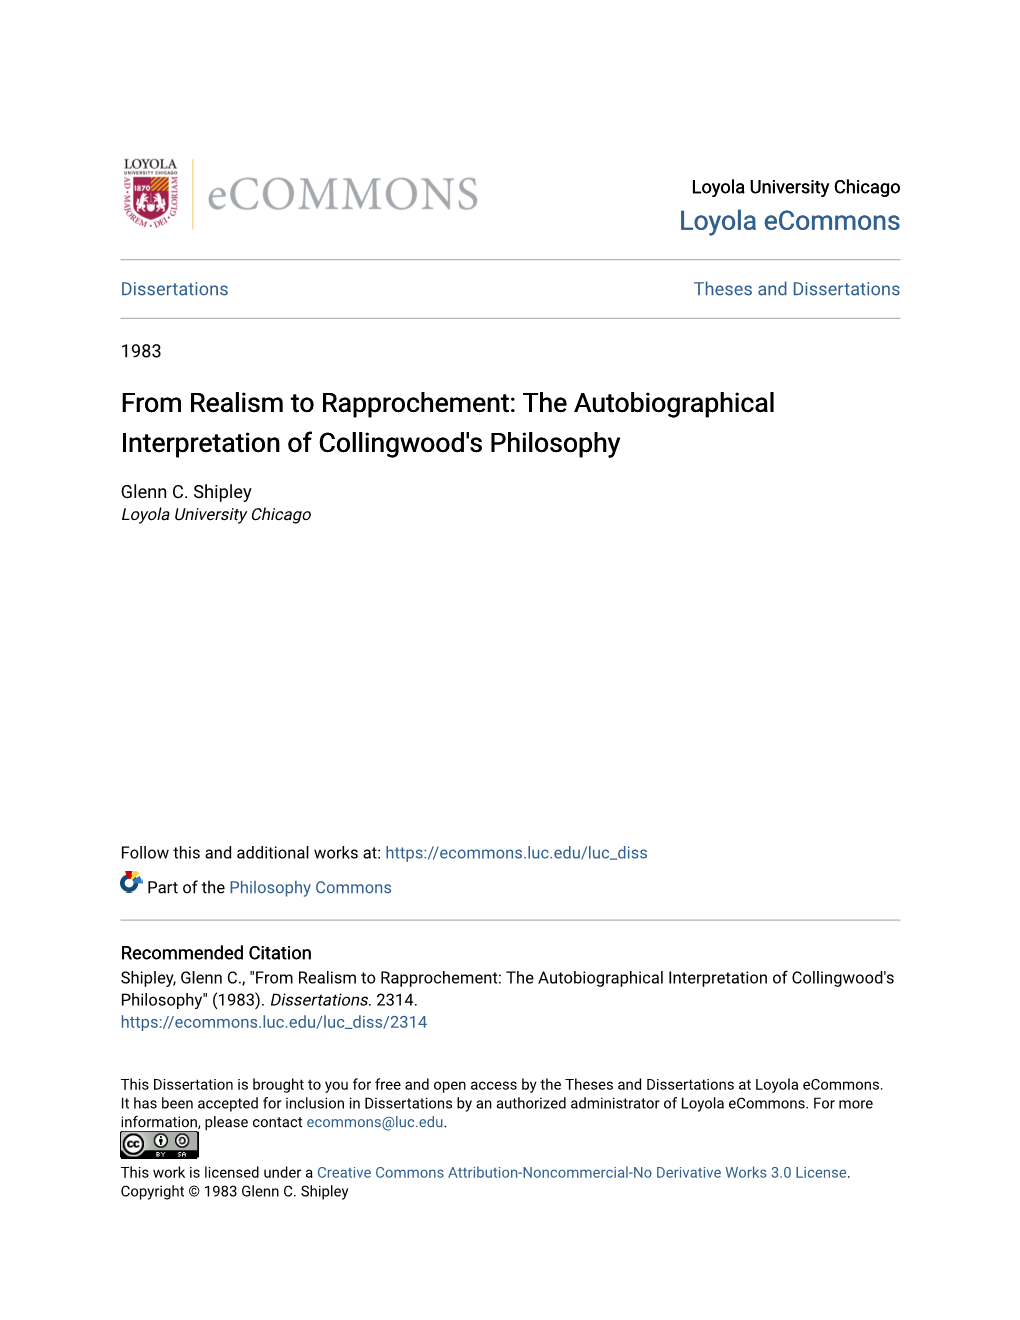 The Autobiographical Interpretation of Collingwood's Philosophy